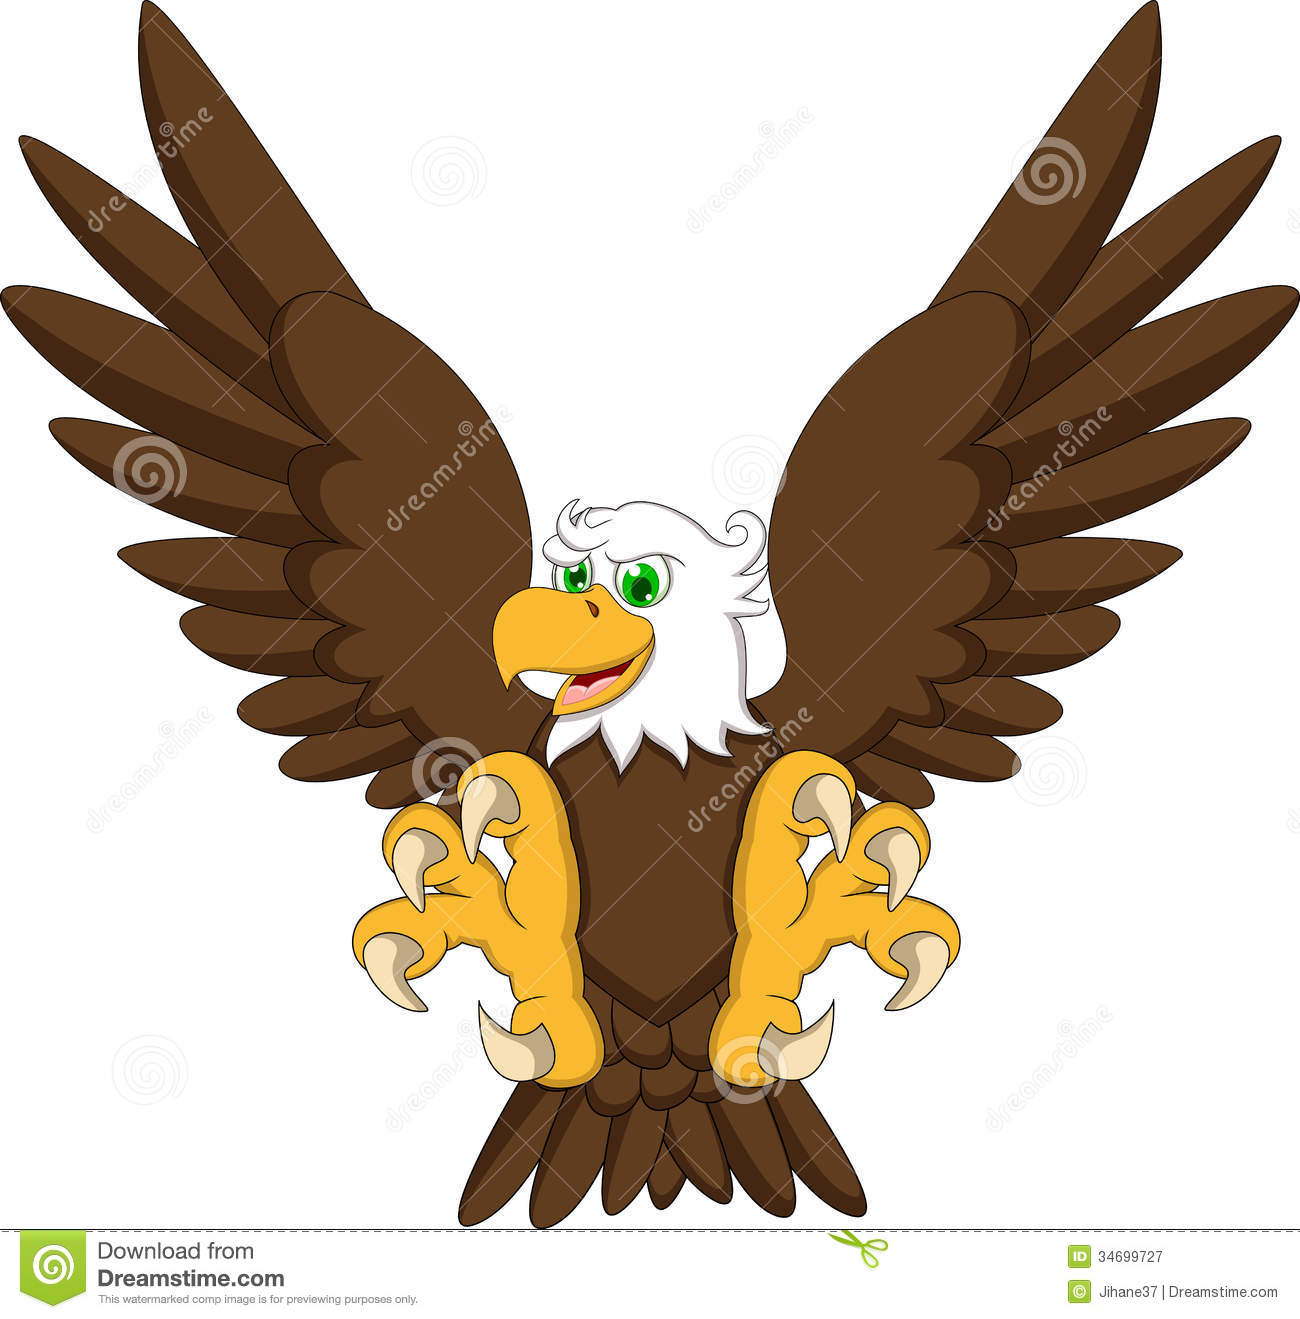 Eagle Cartoon Flying Royalty Free Stock Photography   Image  34699727